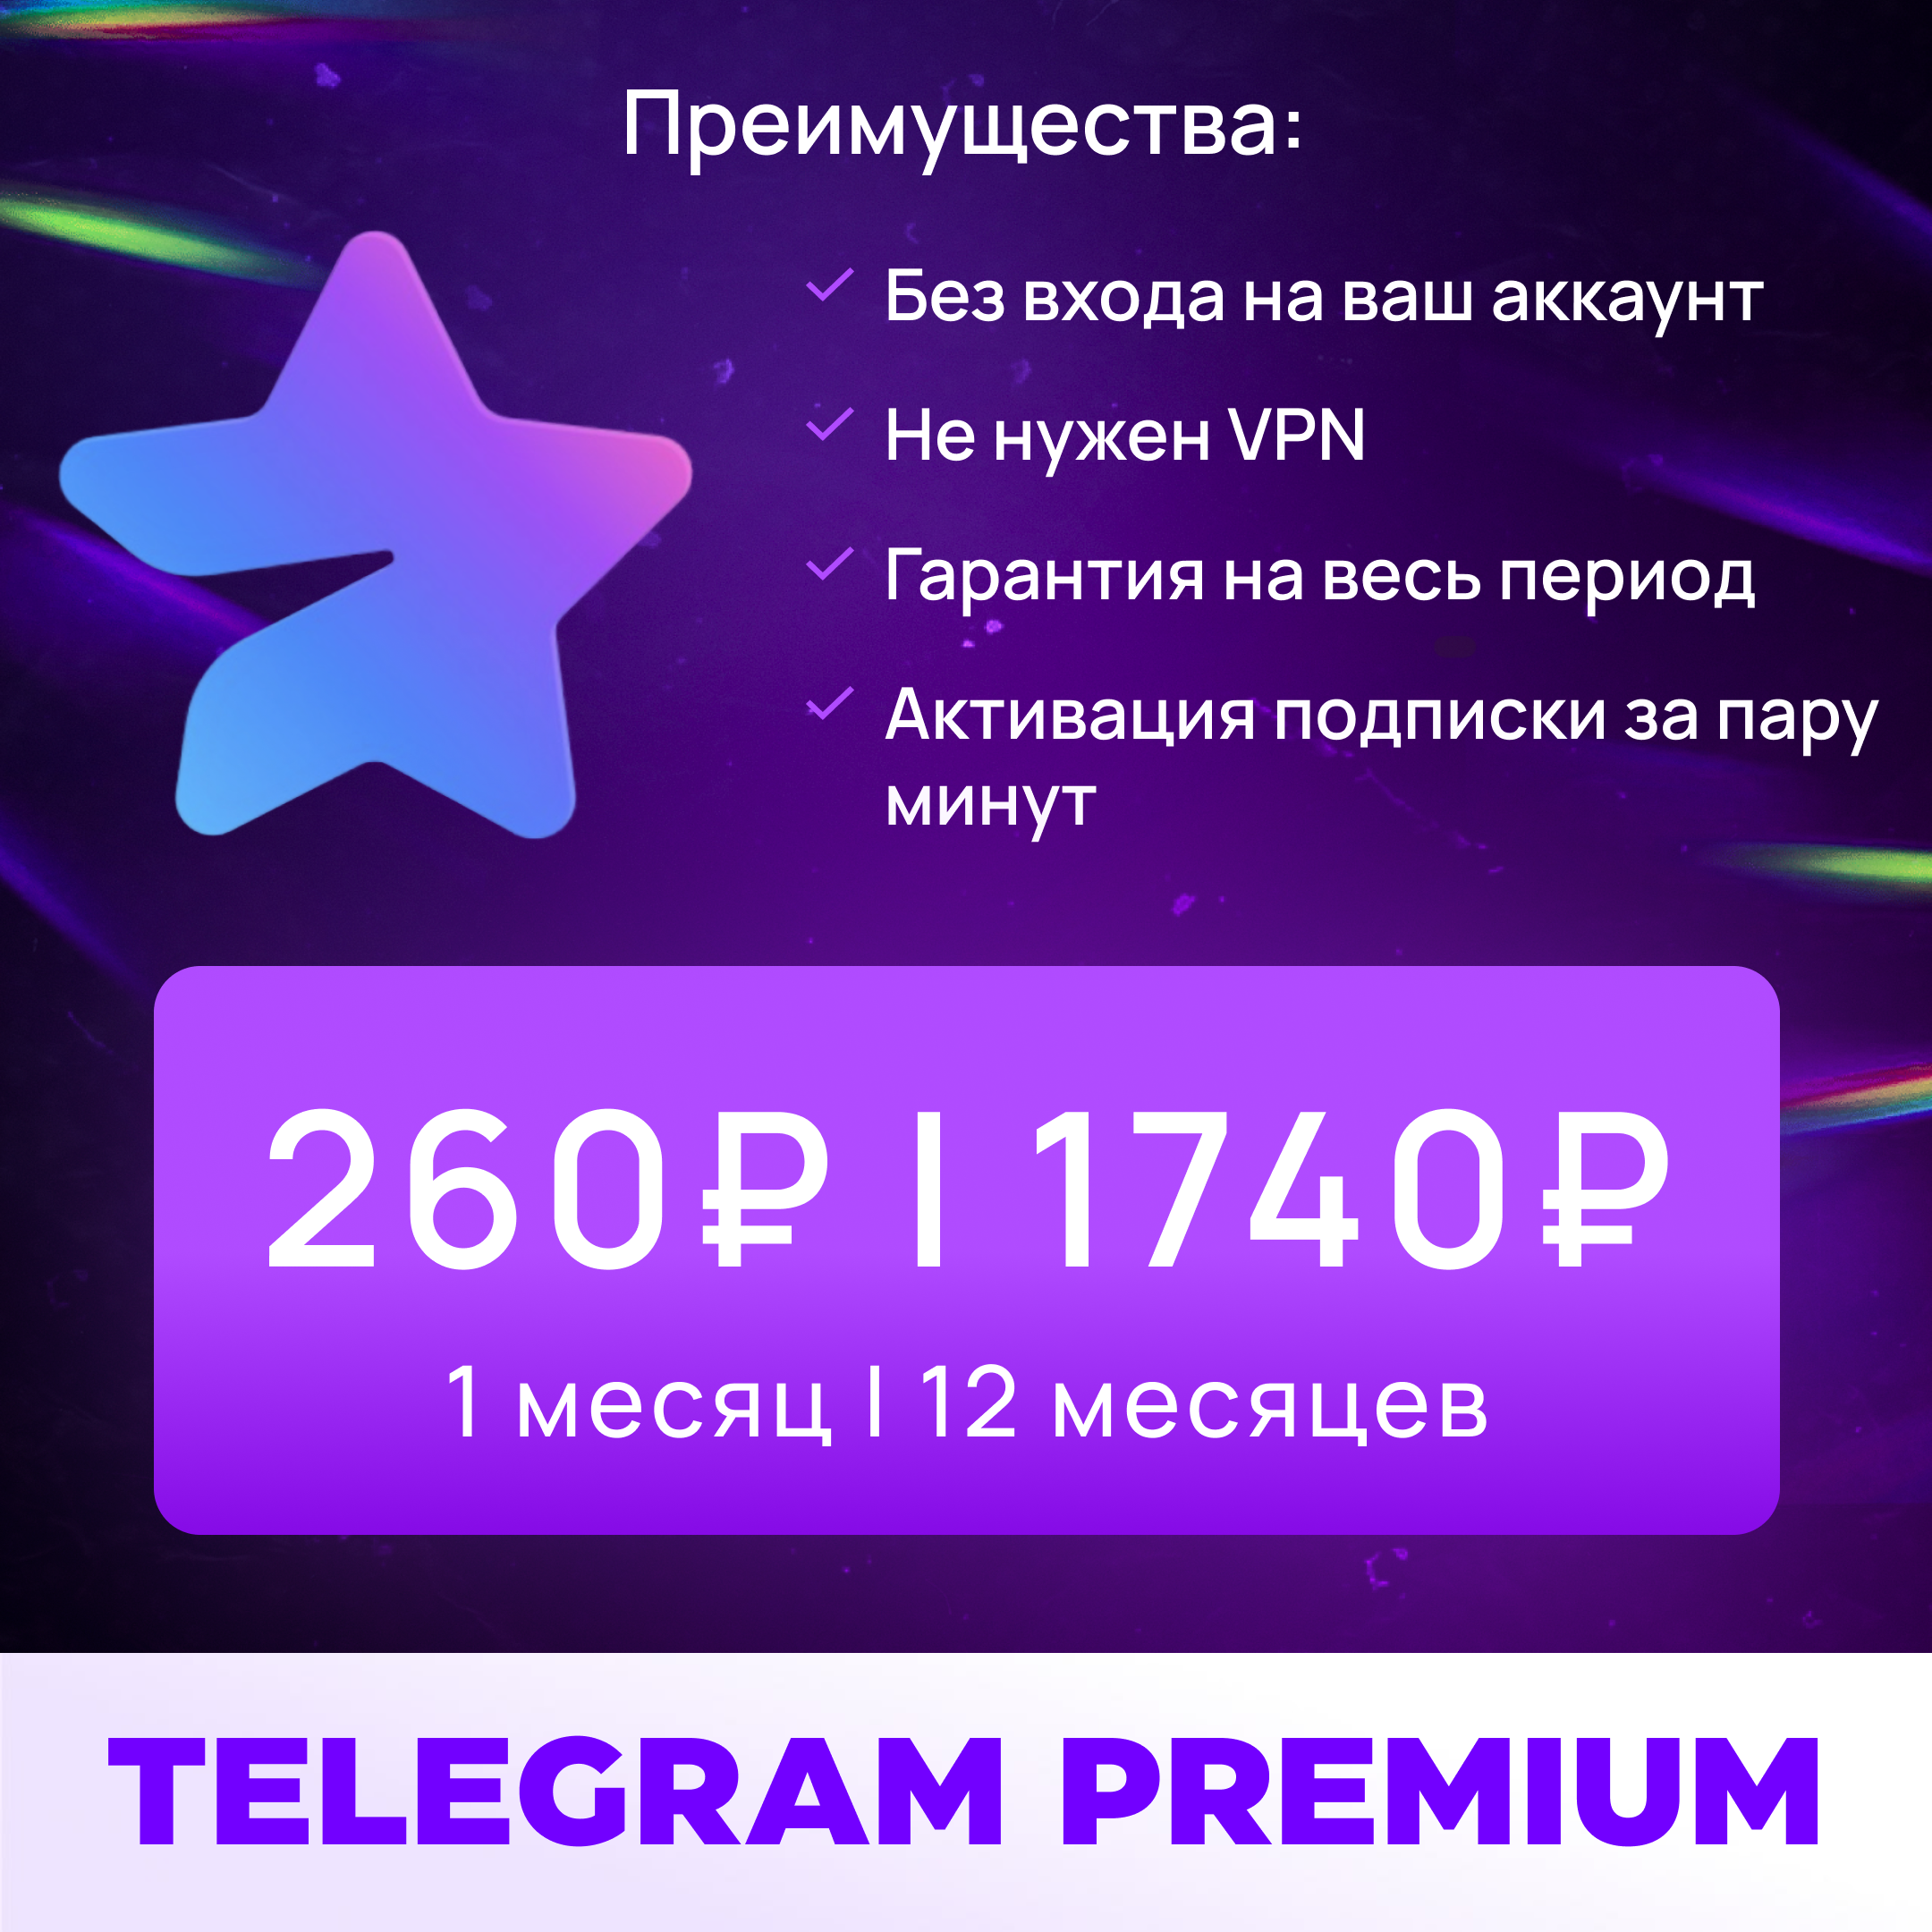 Телеграмм премиум скачать бесплатно андроид 2023 последняя версия телеграм фото 91